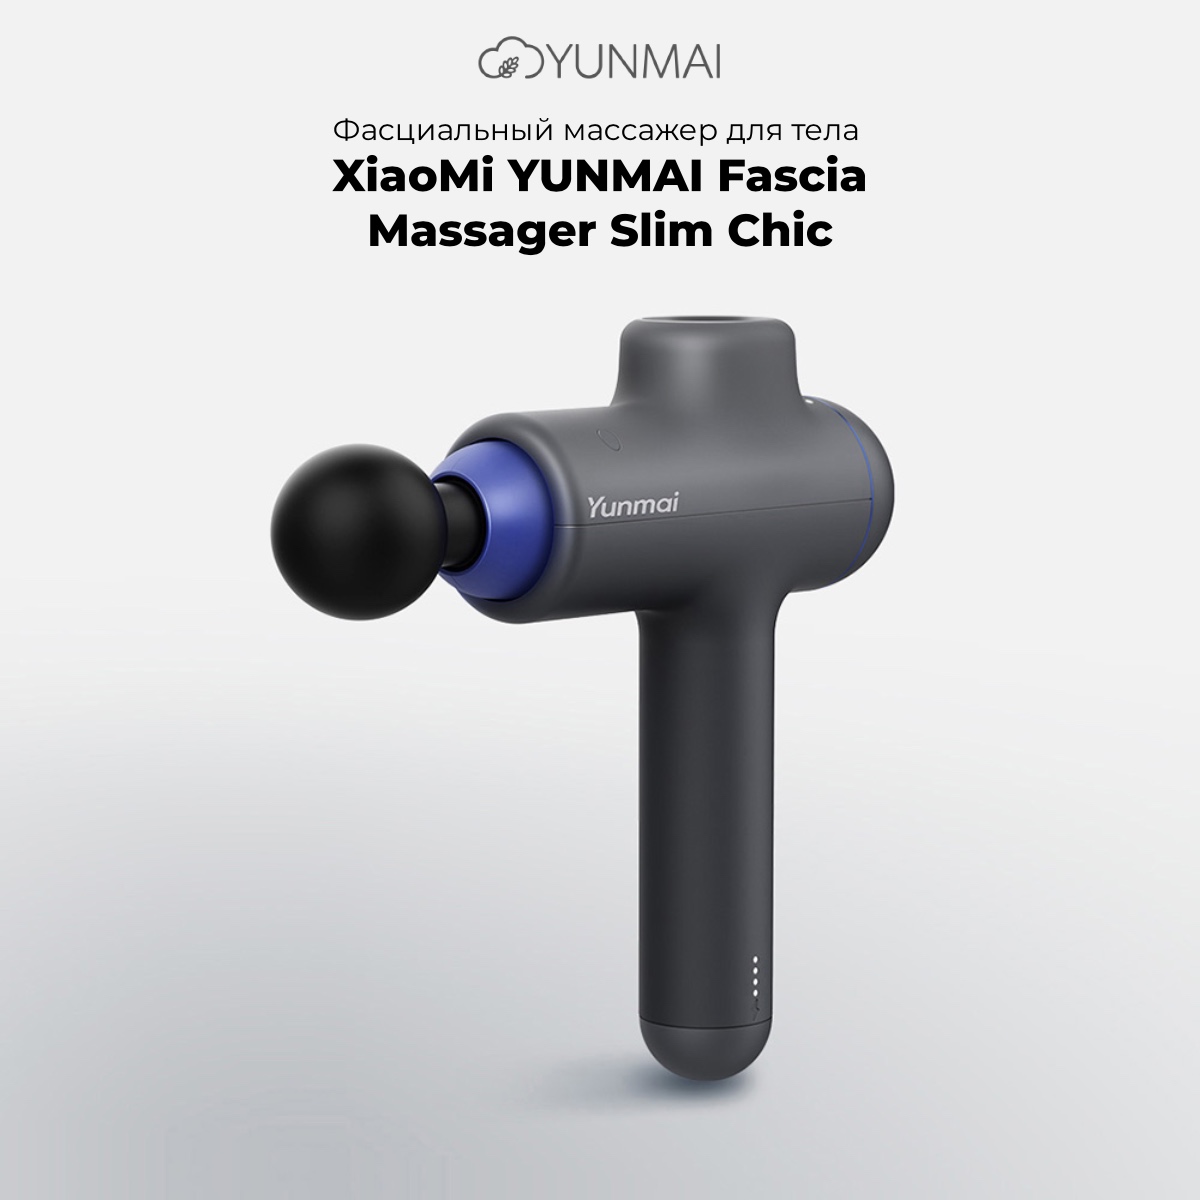 XiaoMi-YUNMAI-Fascia-Massager-Slim-Chic-YMJM-420T-01